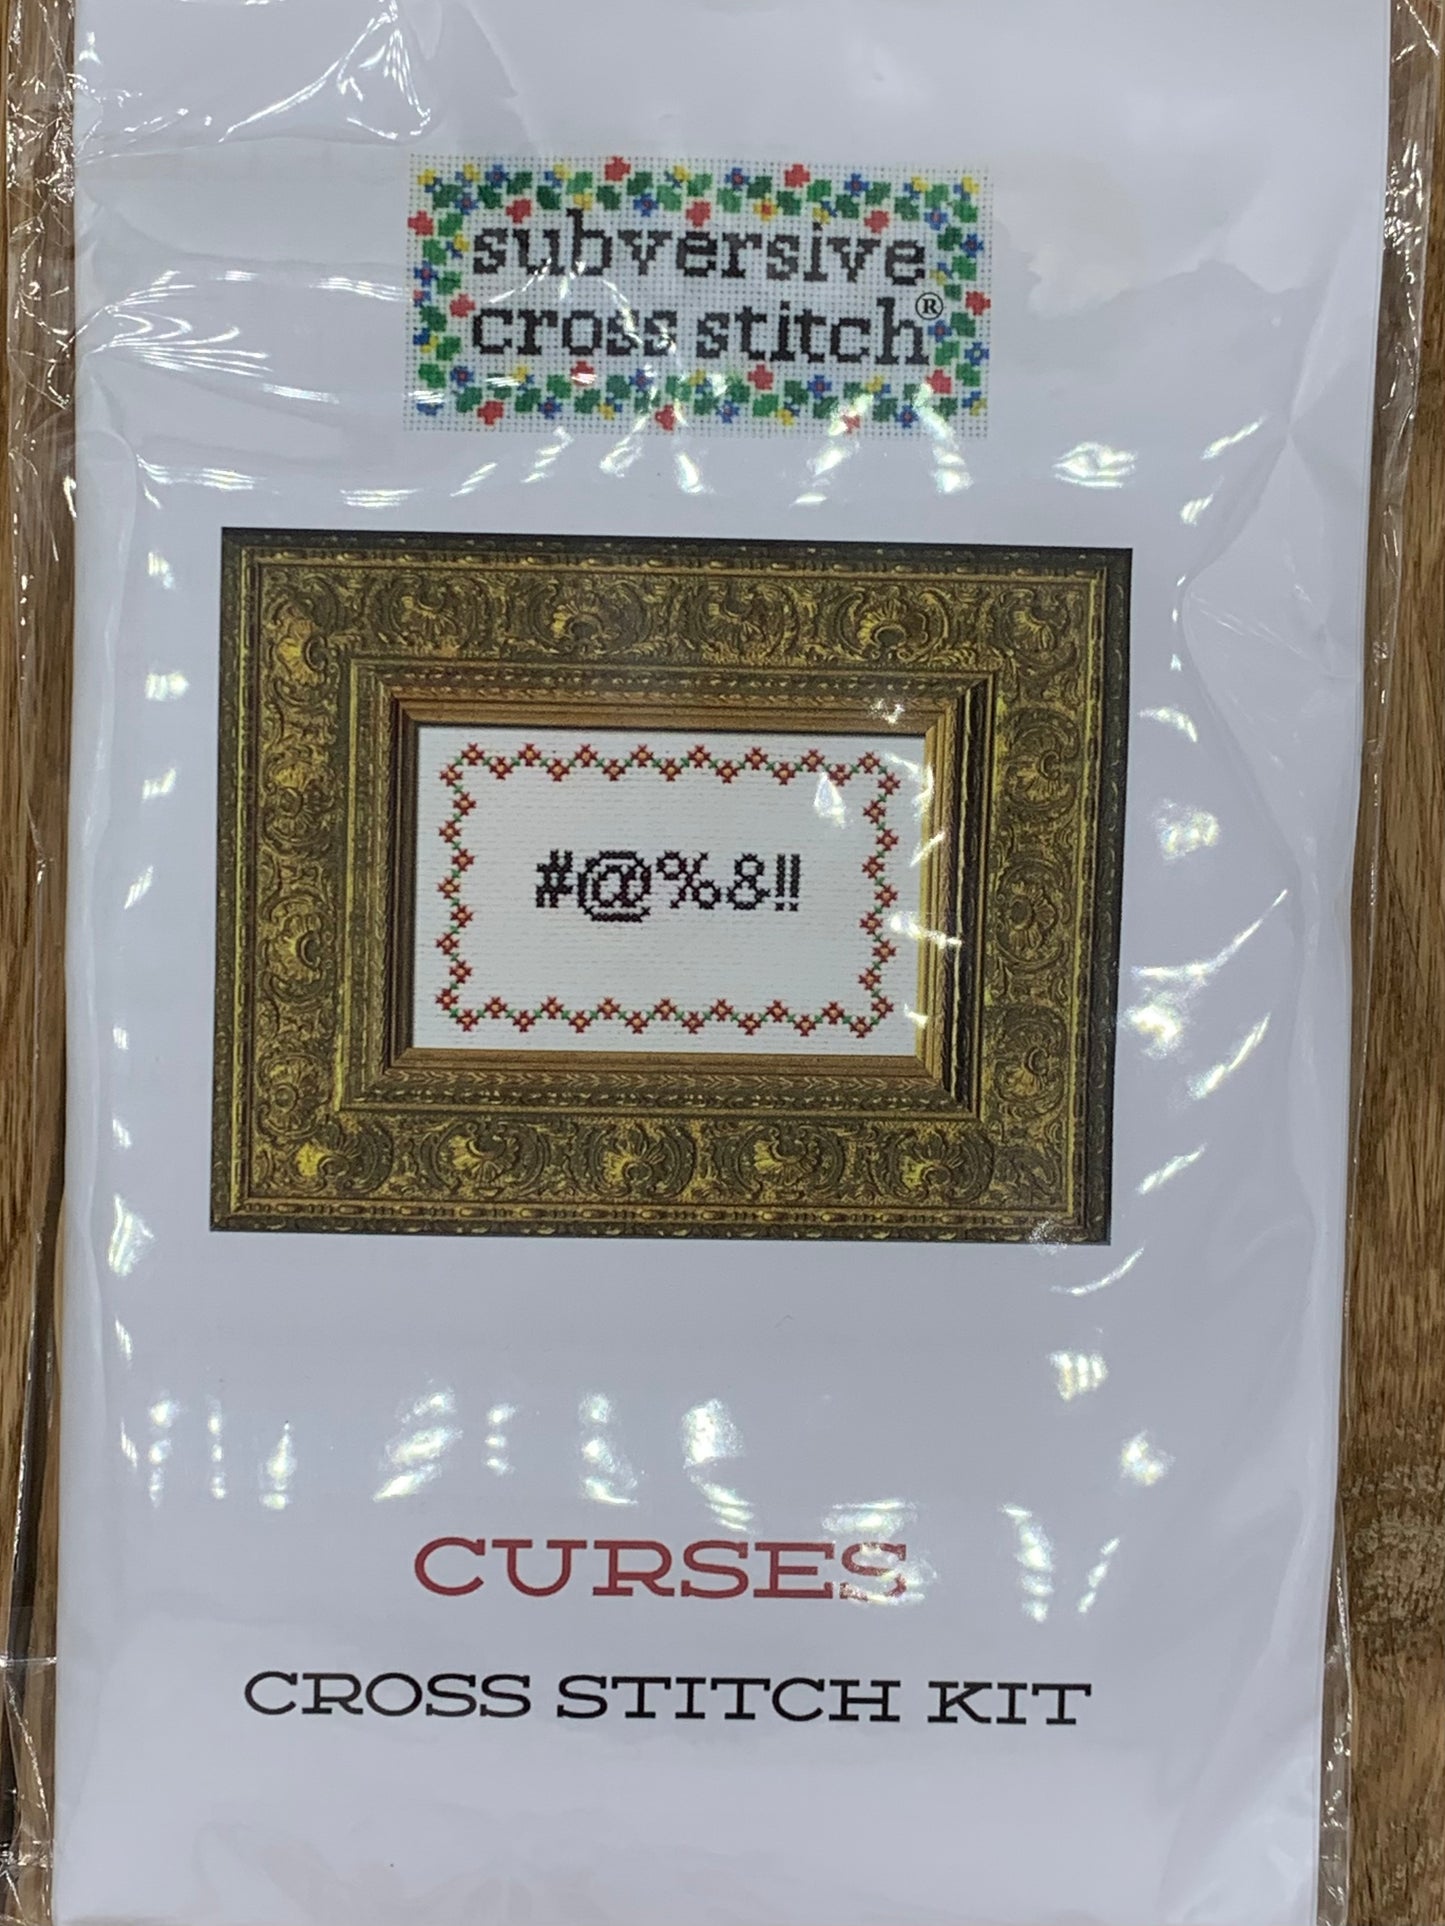 Curses - Cross Stitch Kit